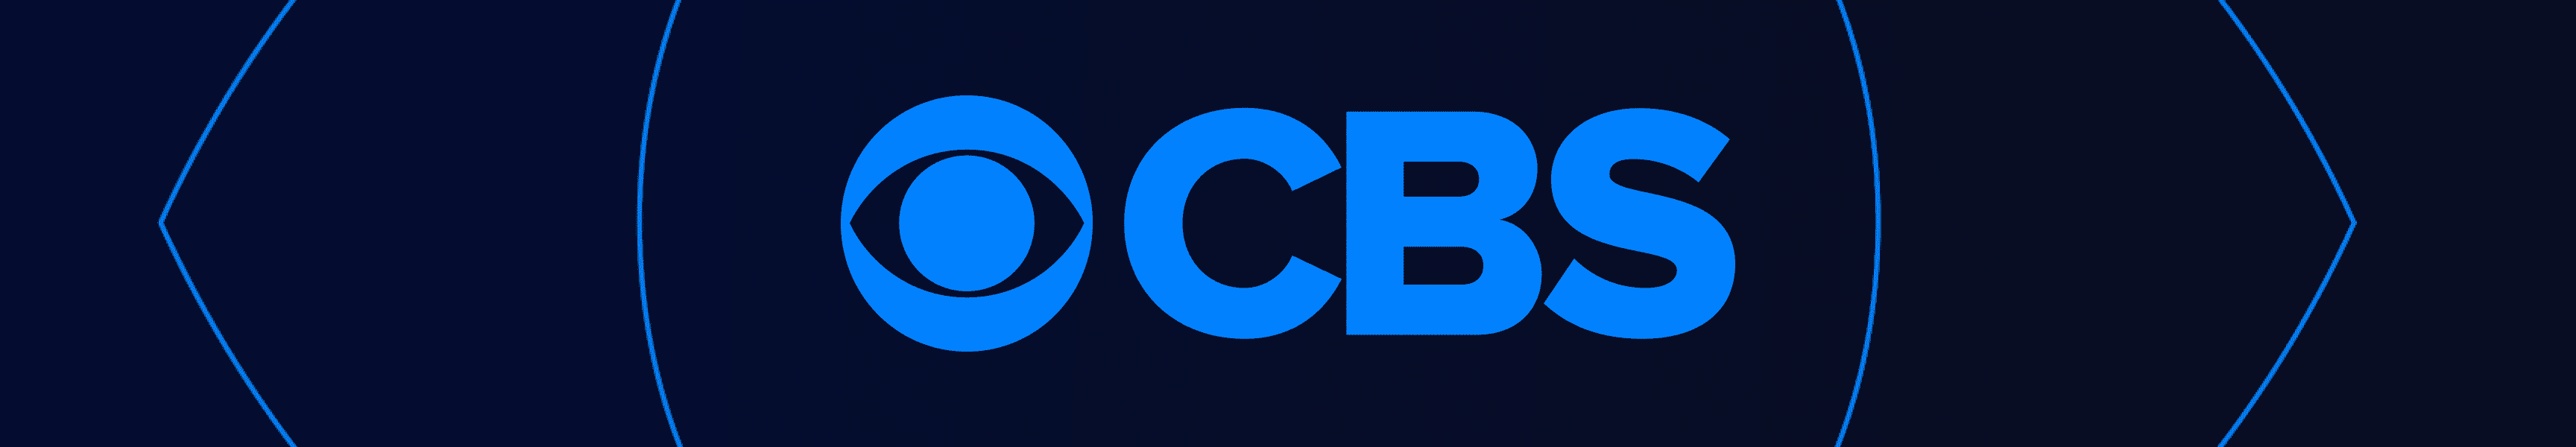 CBS Unterhaltung Leggings